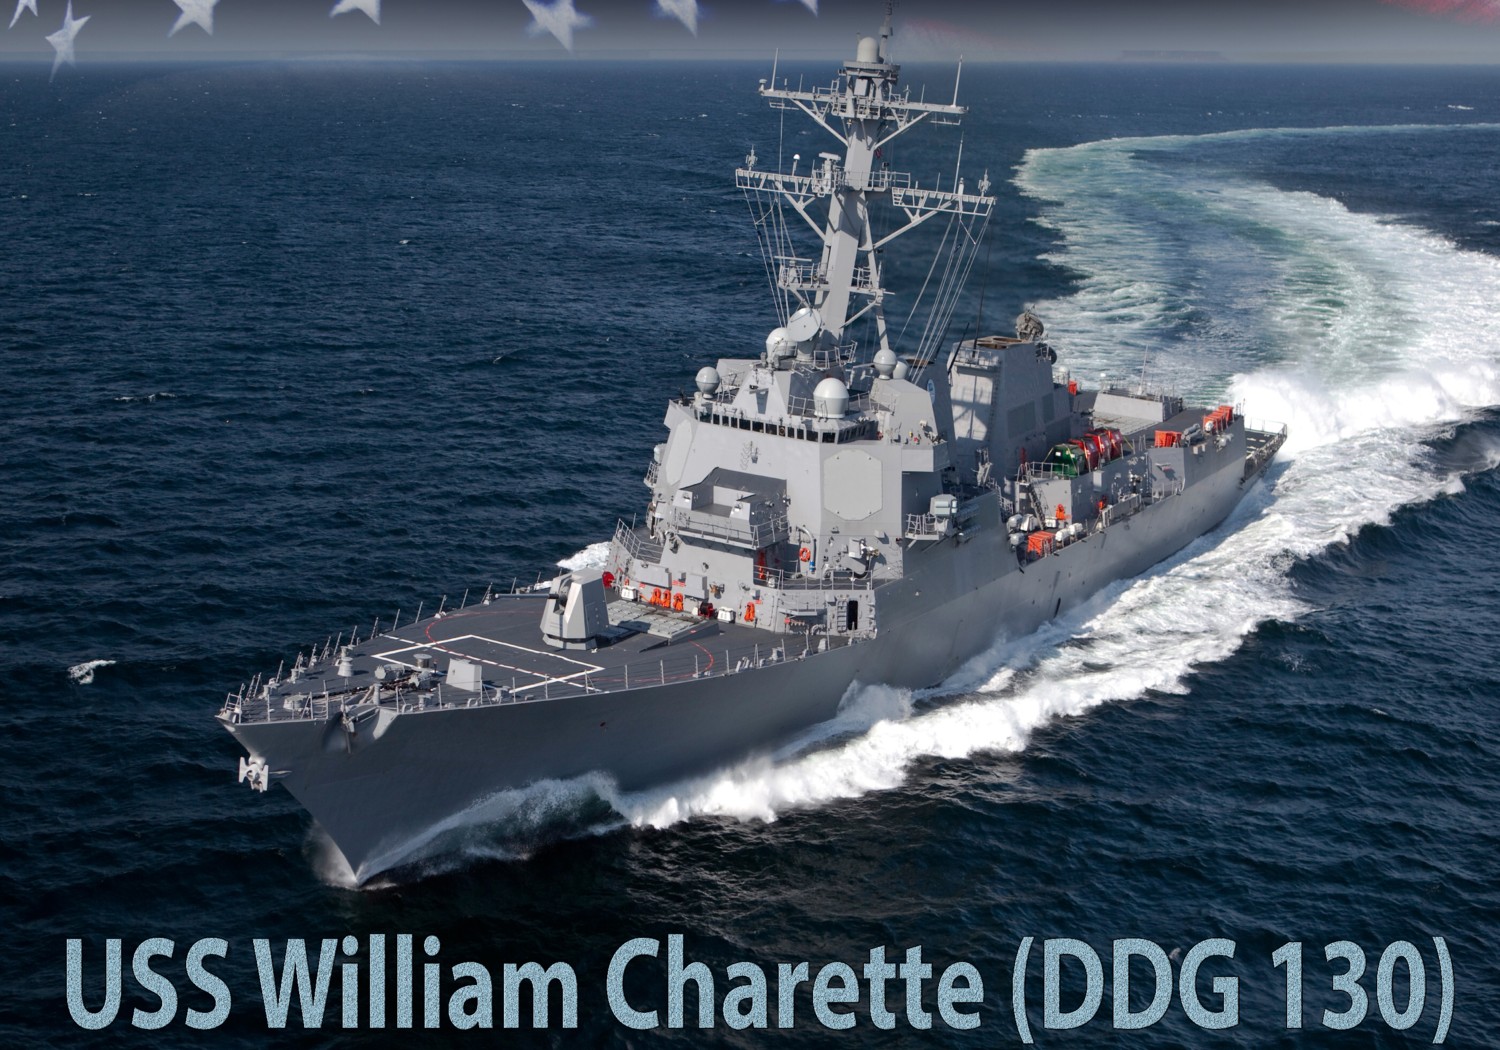 ddg-130 uss william charette arleigh burke class guided missile destroyer us navy aegis gdbiw bath 02x